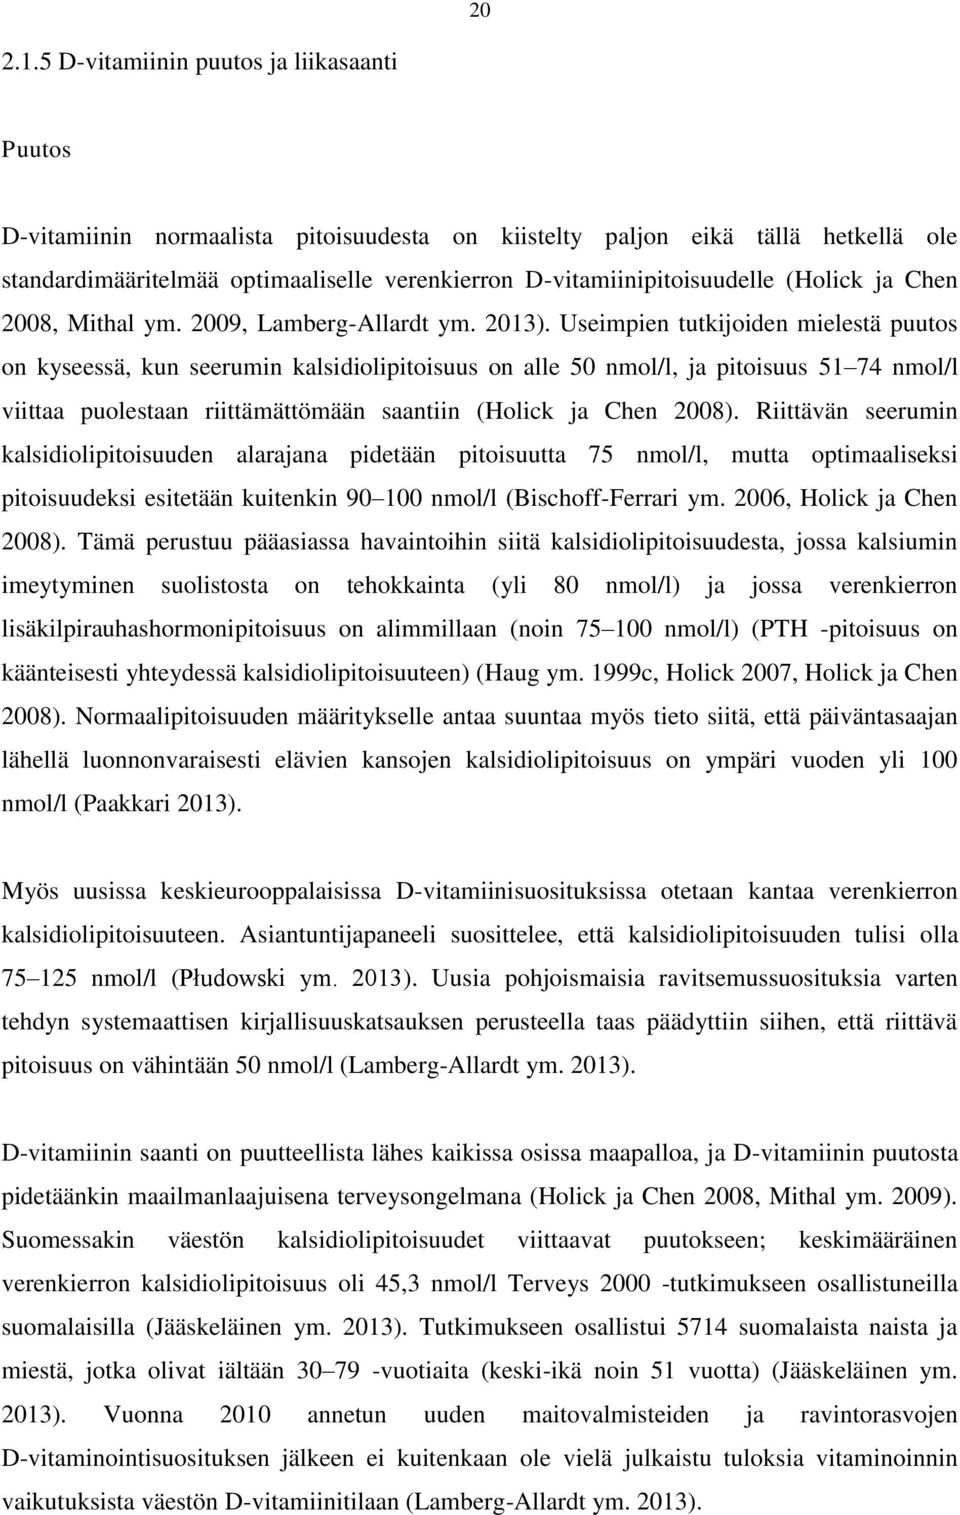 D-vitamiinipitoisuudelle (Holick ja Chen 2008, Mithal ym. 2009, Lamberg-Allardt ym. 2013).